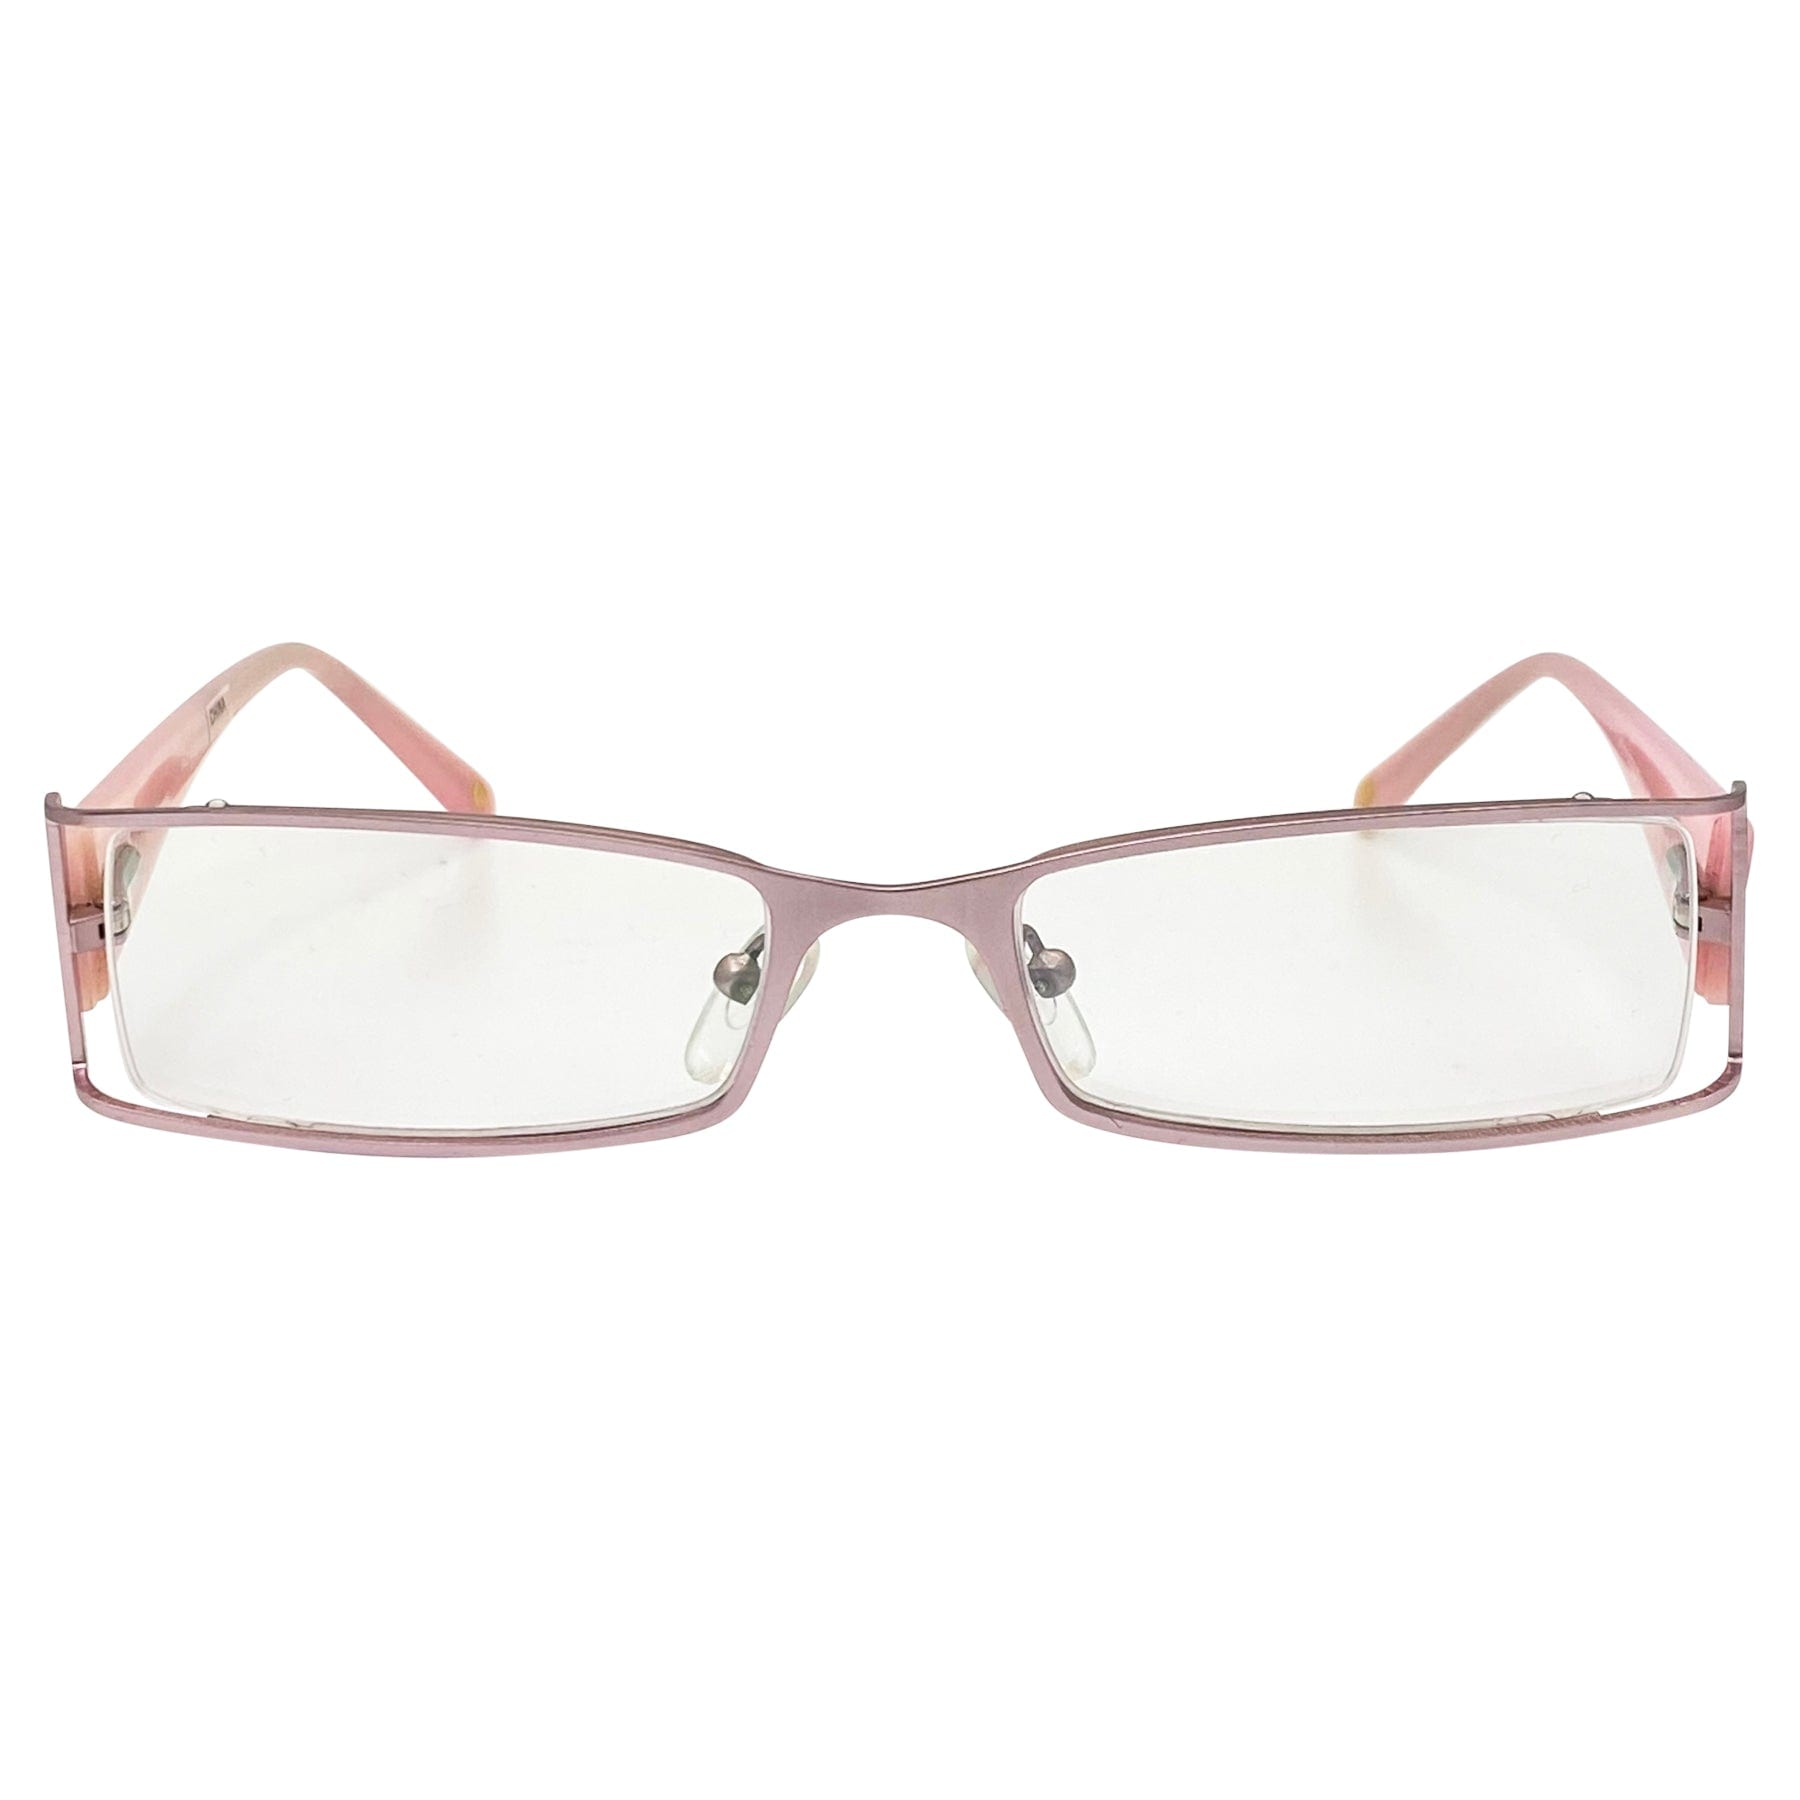 90s retro glasses frames in the style ADORN